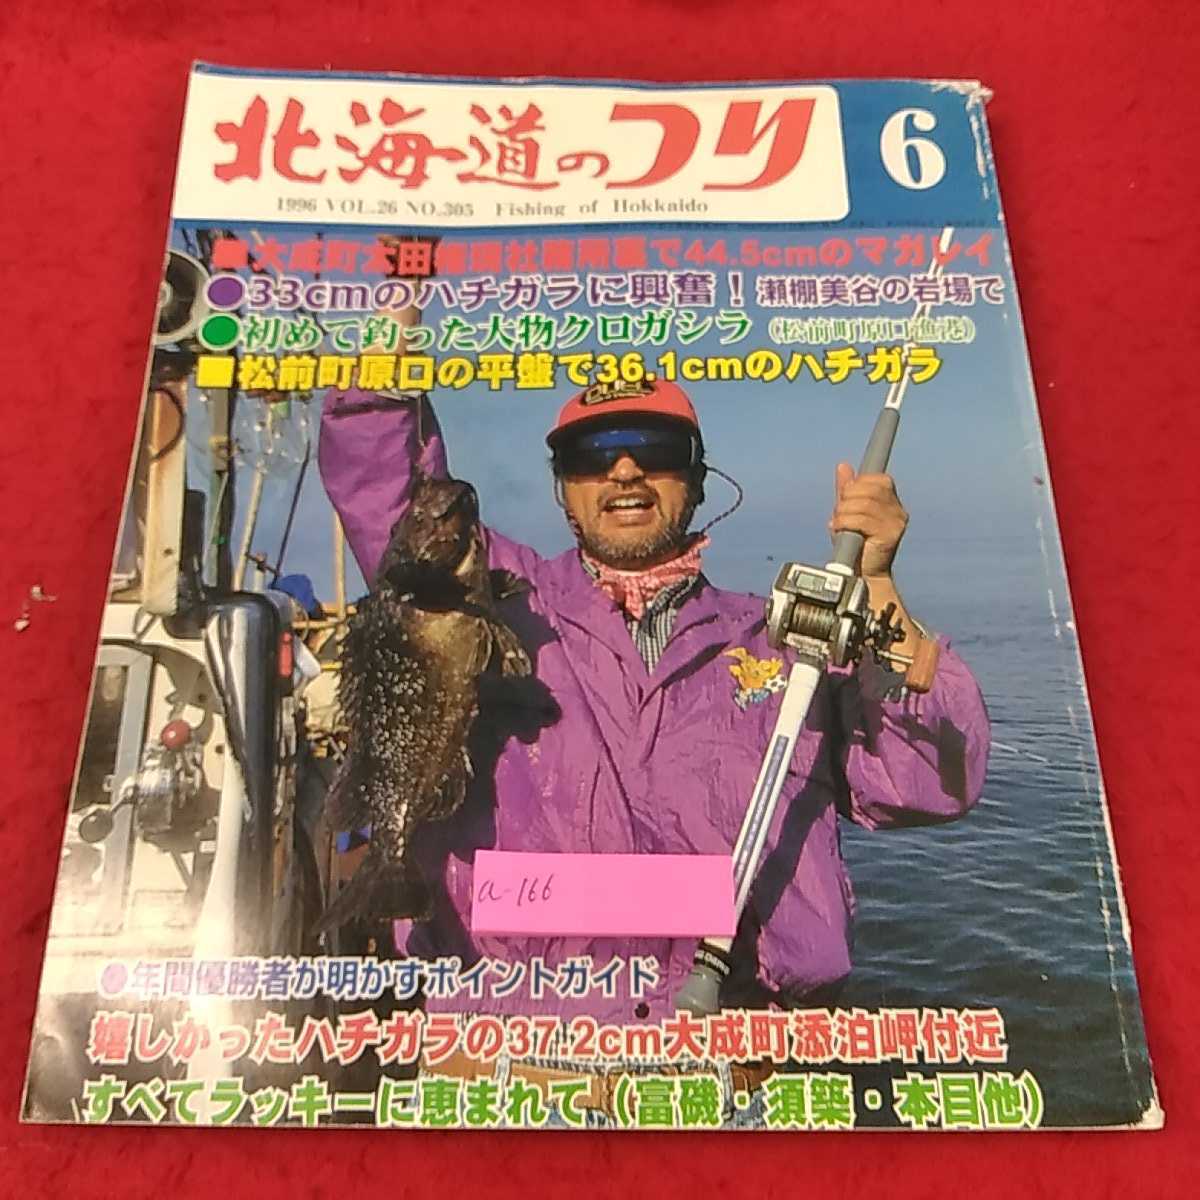 A-166 * 13 Hokkaido Fishing 1996/июнь. Big Blogashira поймана впервые